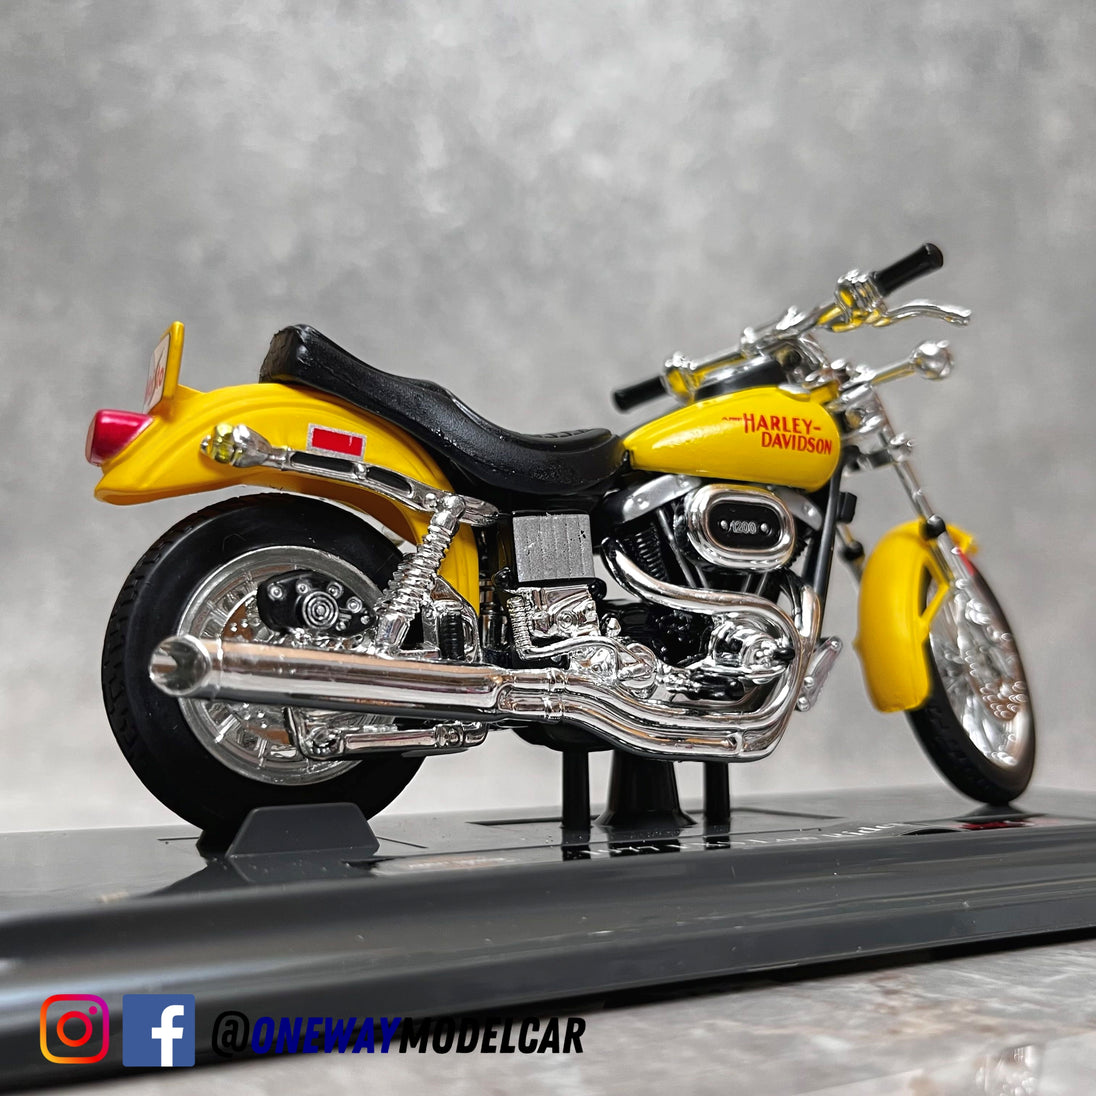 2001 Harley Davidson FXDWG Dyna Wide Glide Diecast Bike 1:18 Motorcycle Model By Maisto